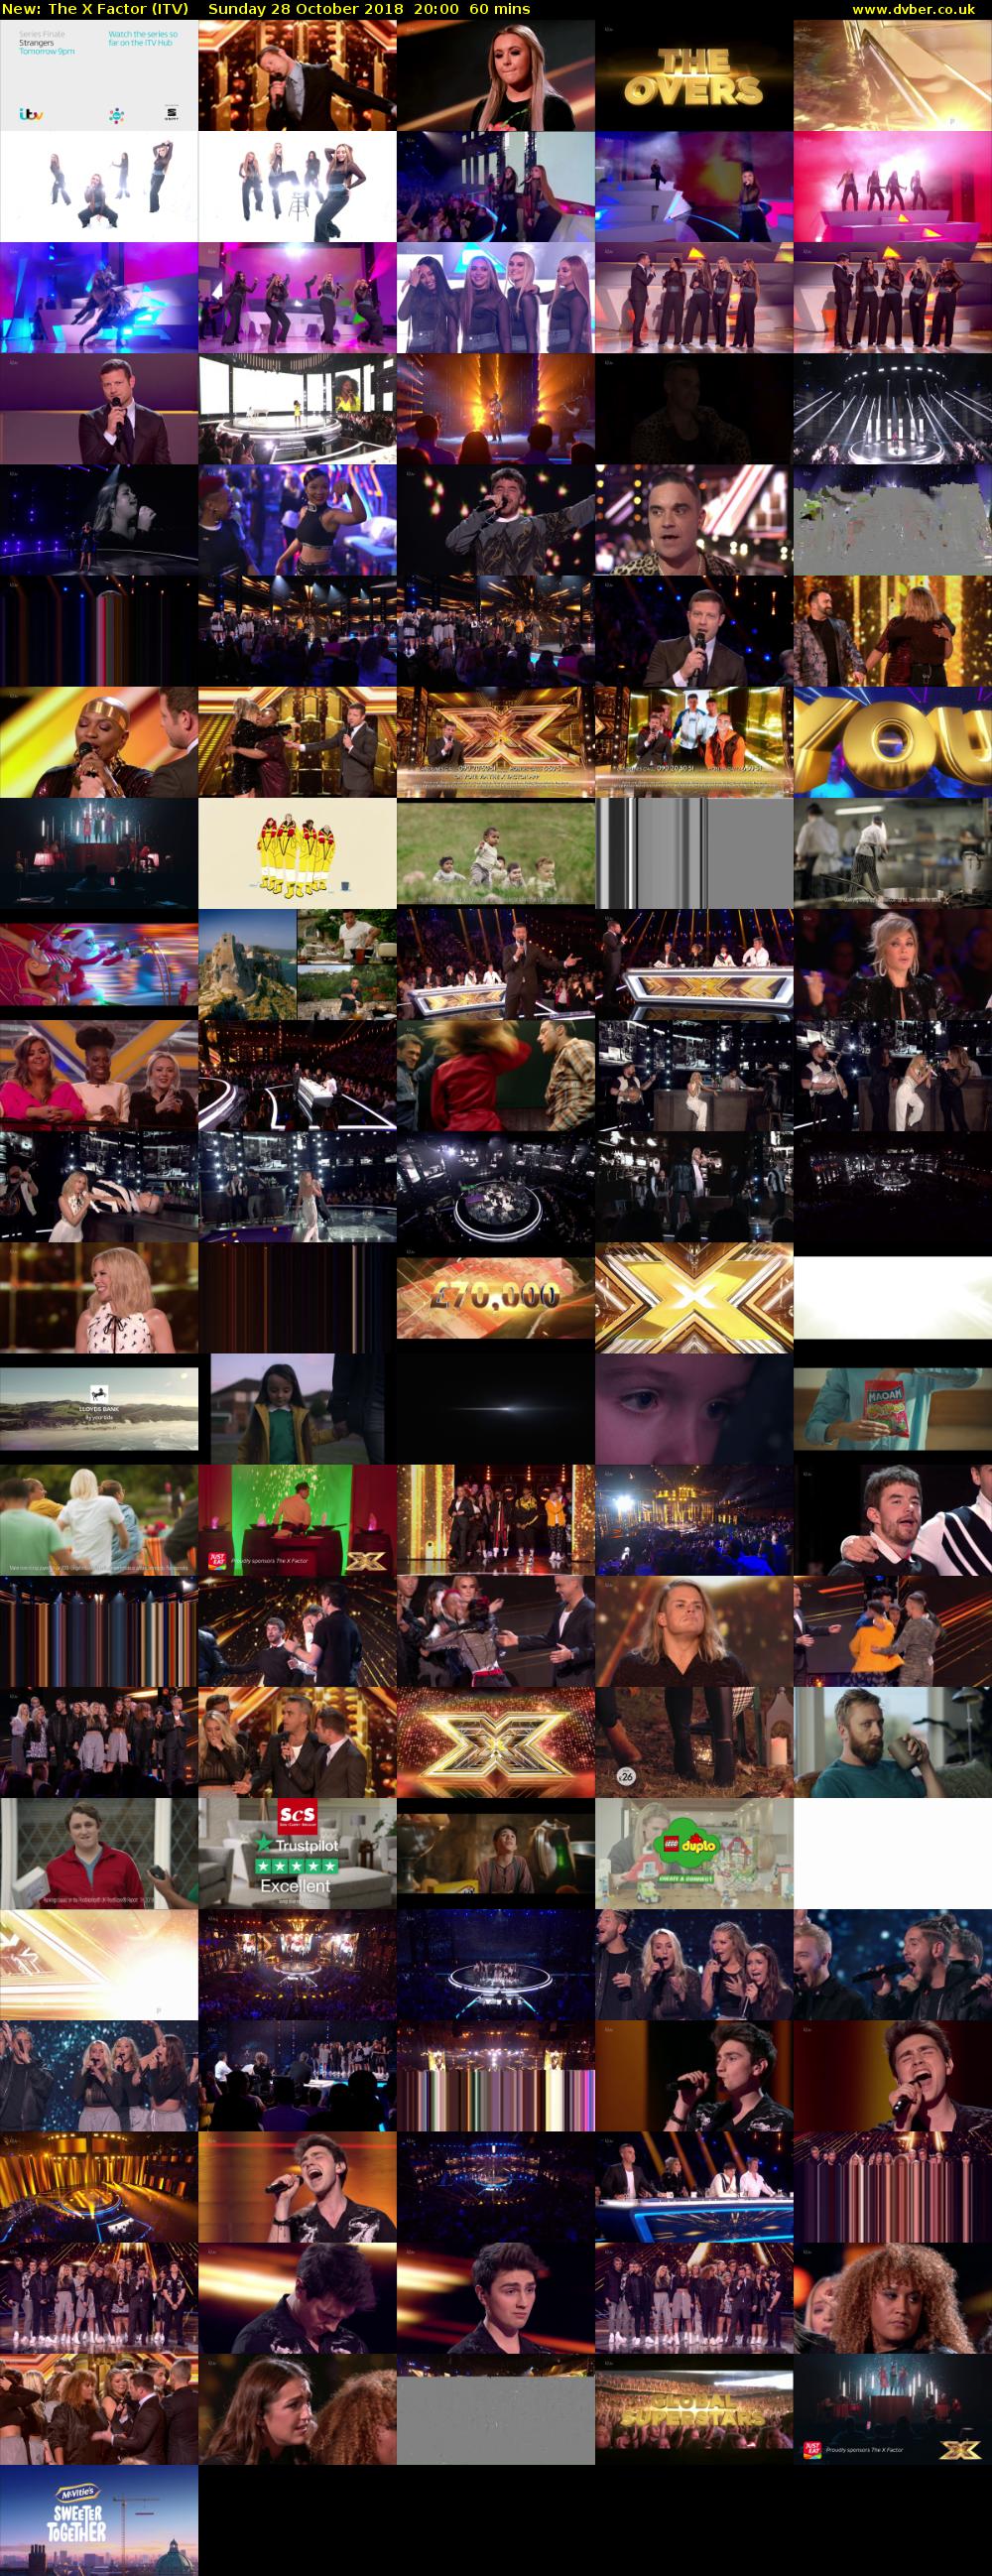 The X Factor (ITV) Sunday 28 October 2018 20:00 - 21:00